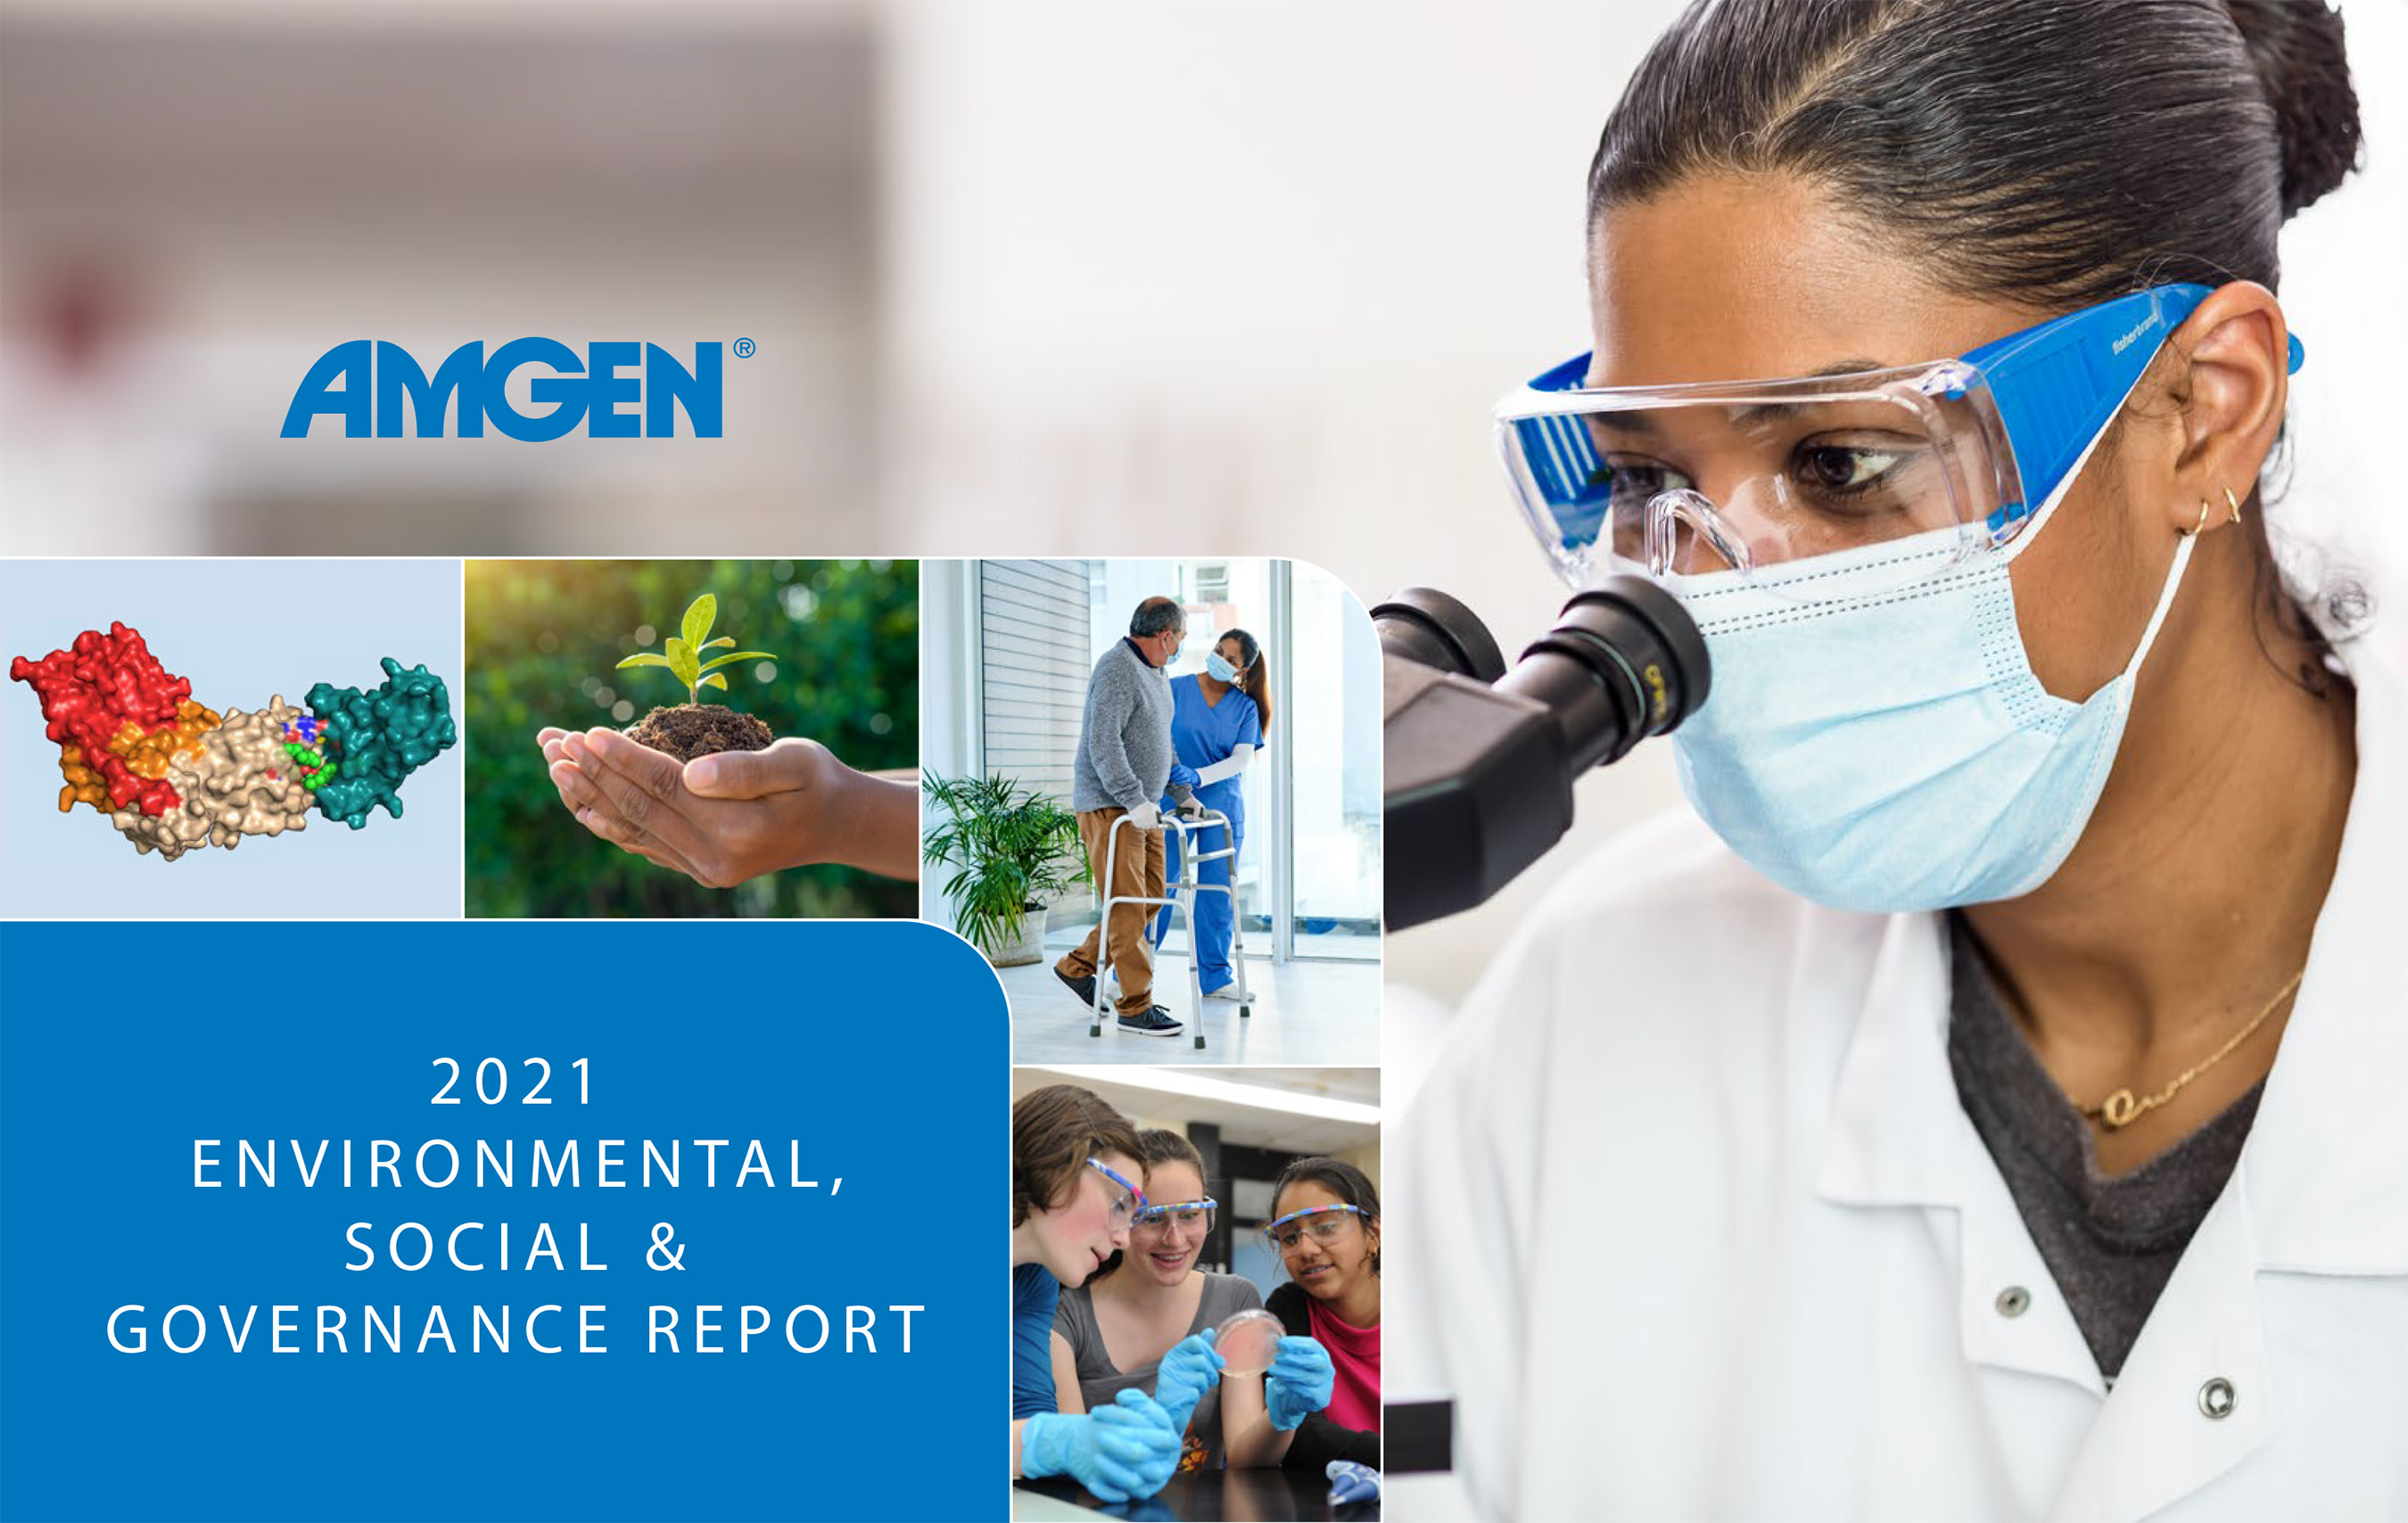 Amgen released its 2021 Environmental, Social & Governance report